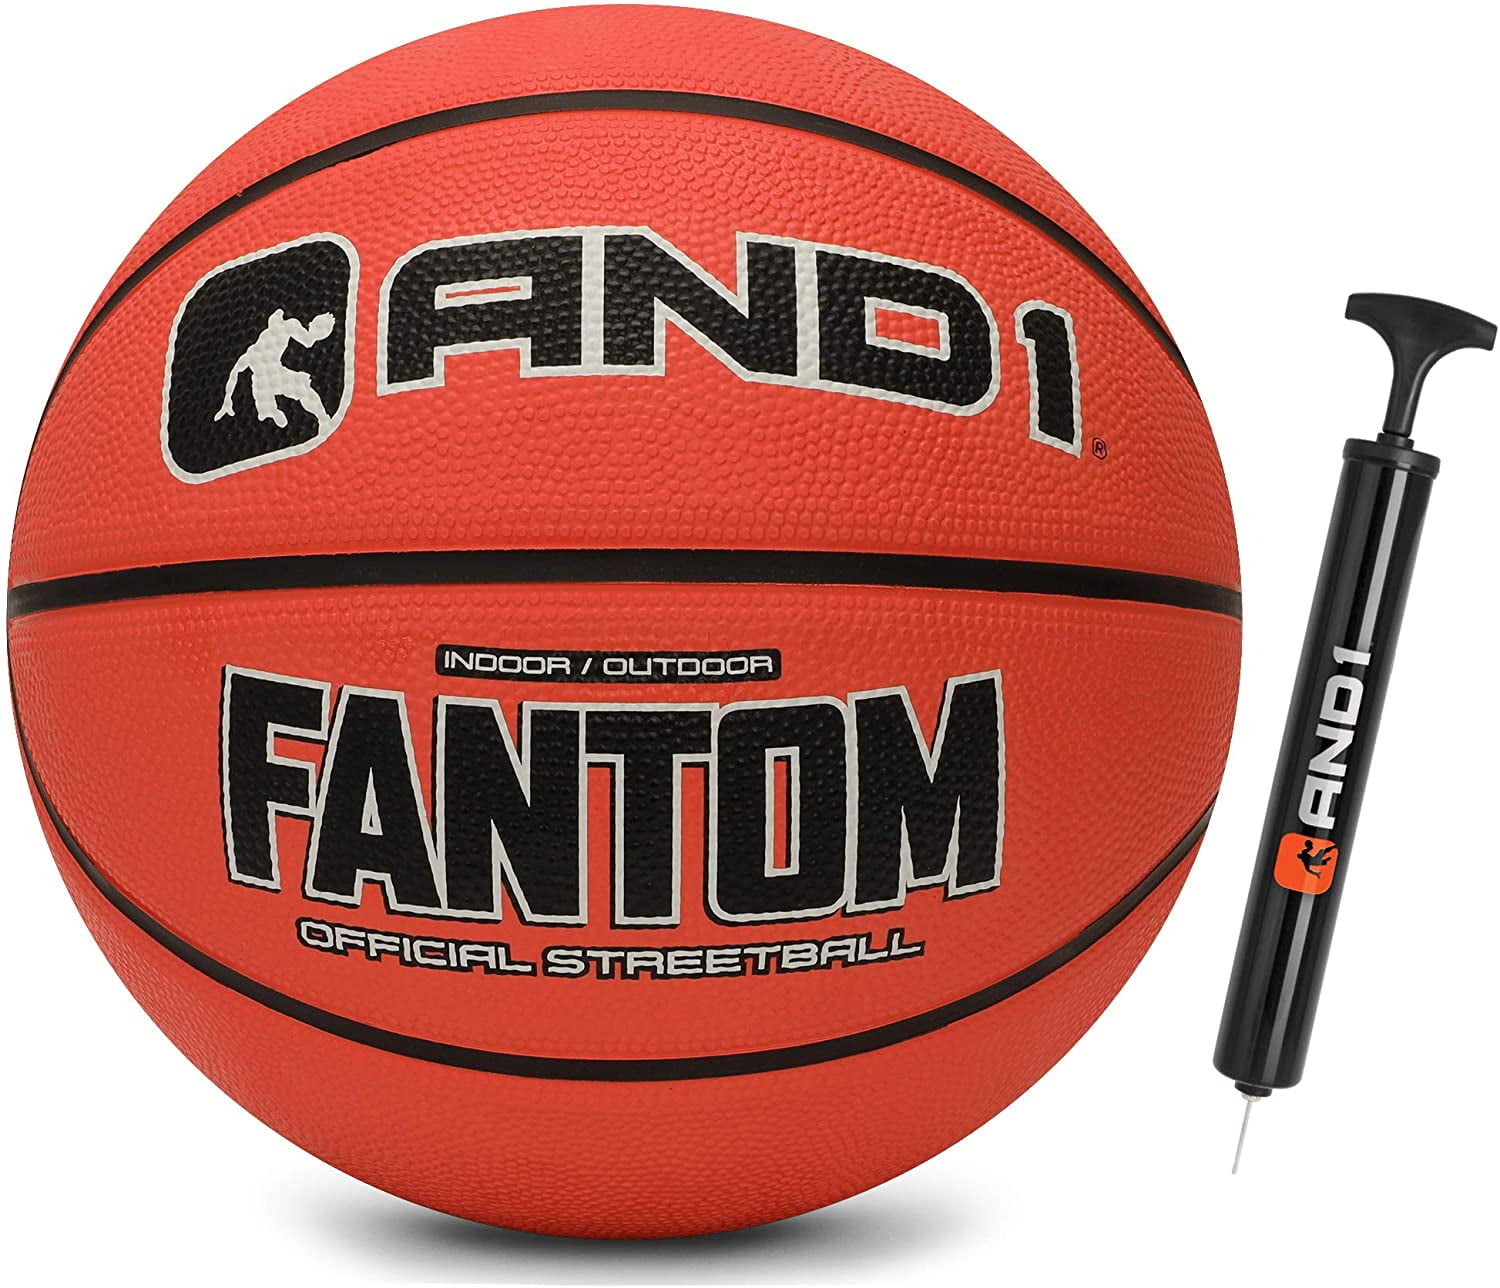 AND1 Fantom Rubber Basketball & Pump, Navy, 29.5